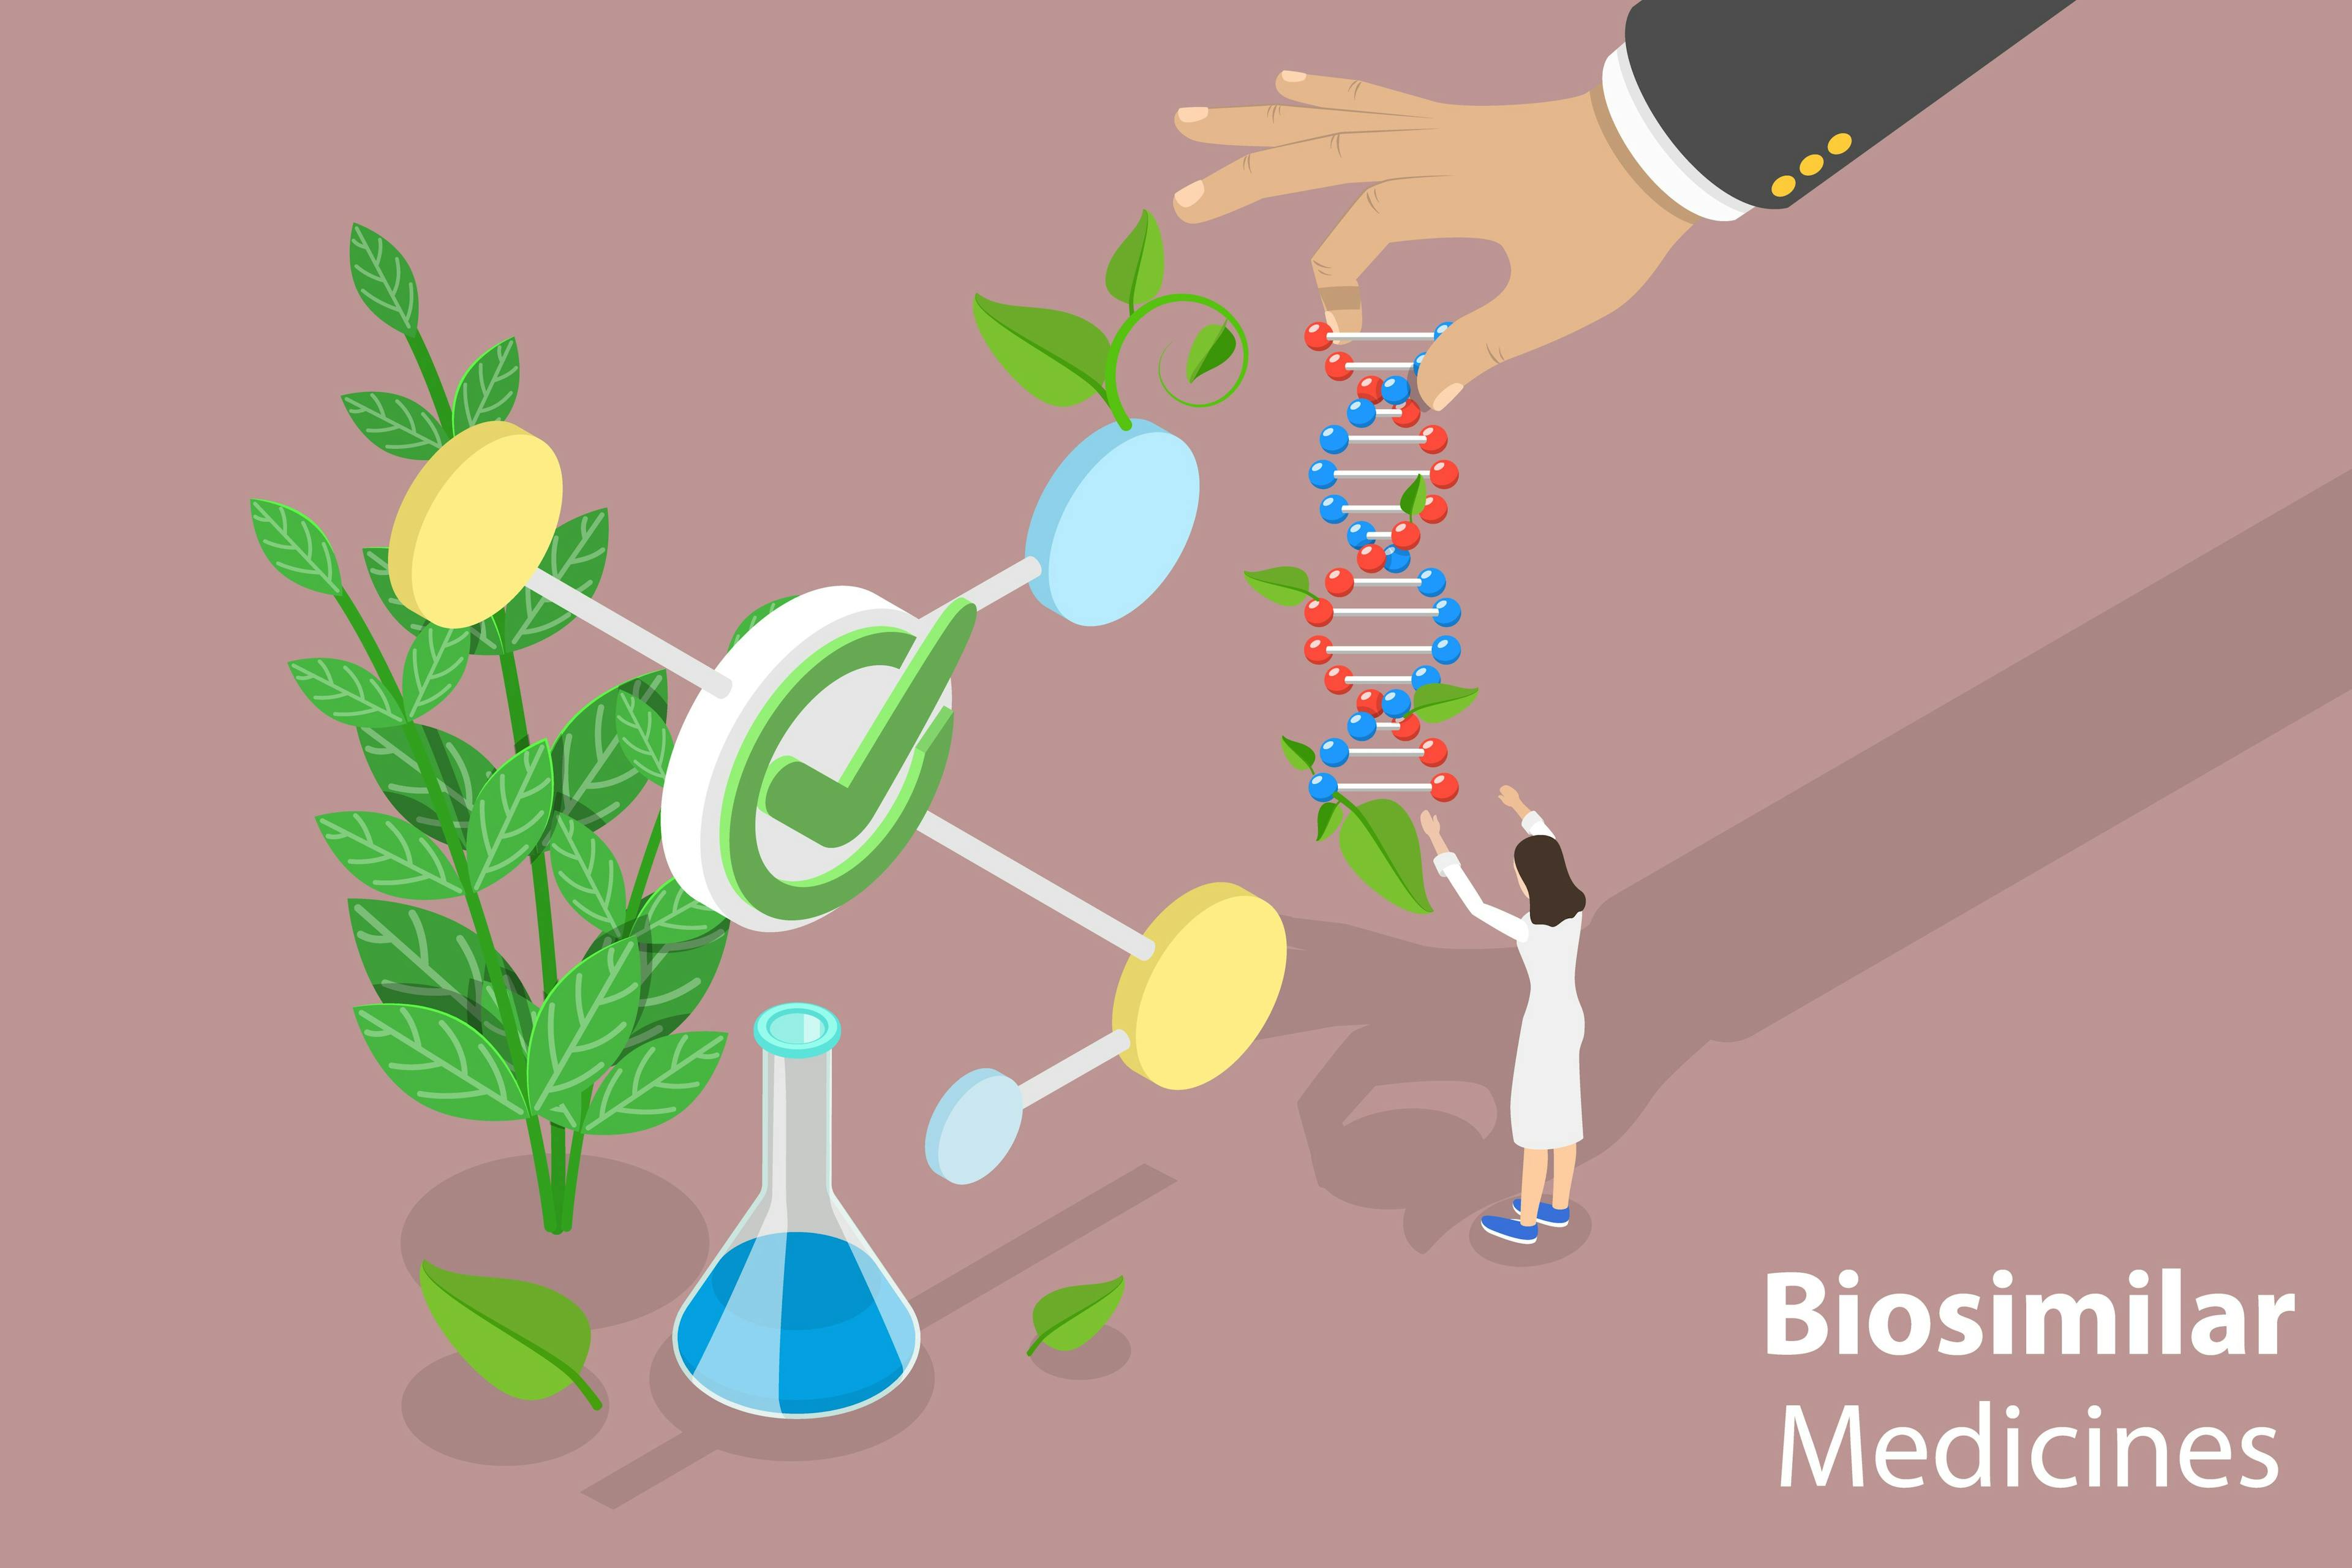 cartoon of a scientist reaching up for DNA molecule with "biosimilar medicine" written in the corner | TarikVision - stock.adobe.com